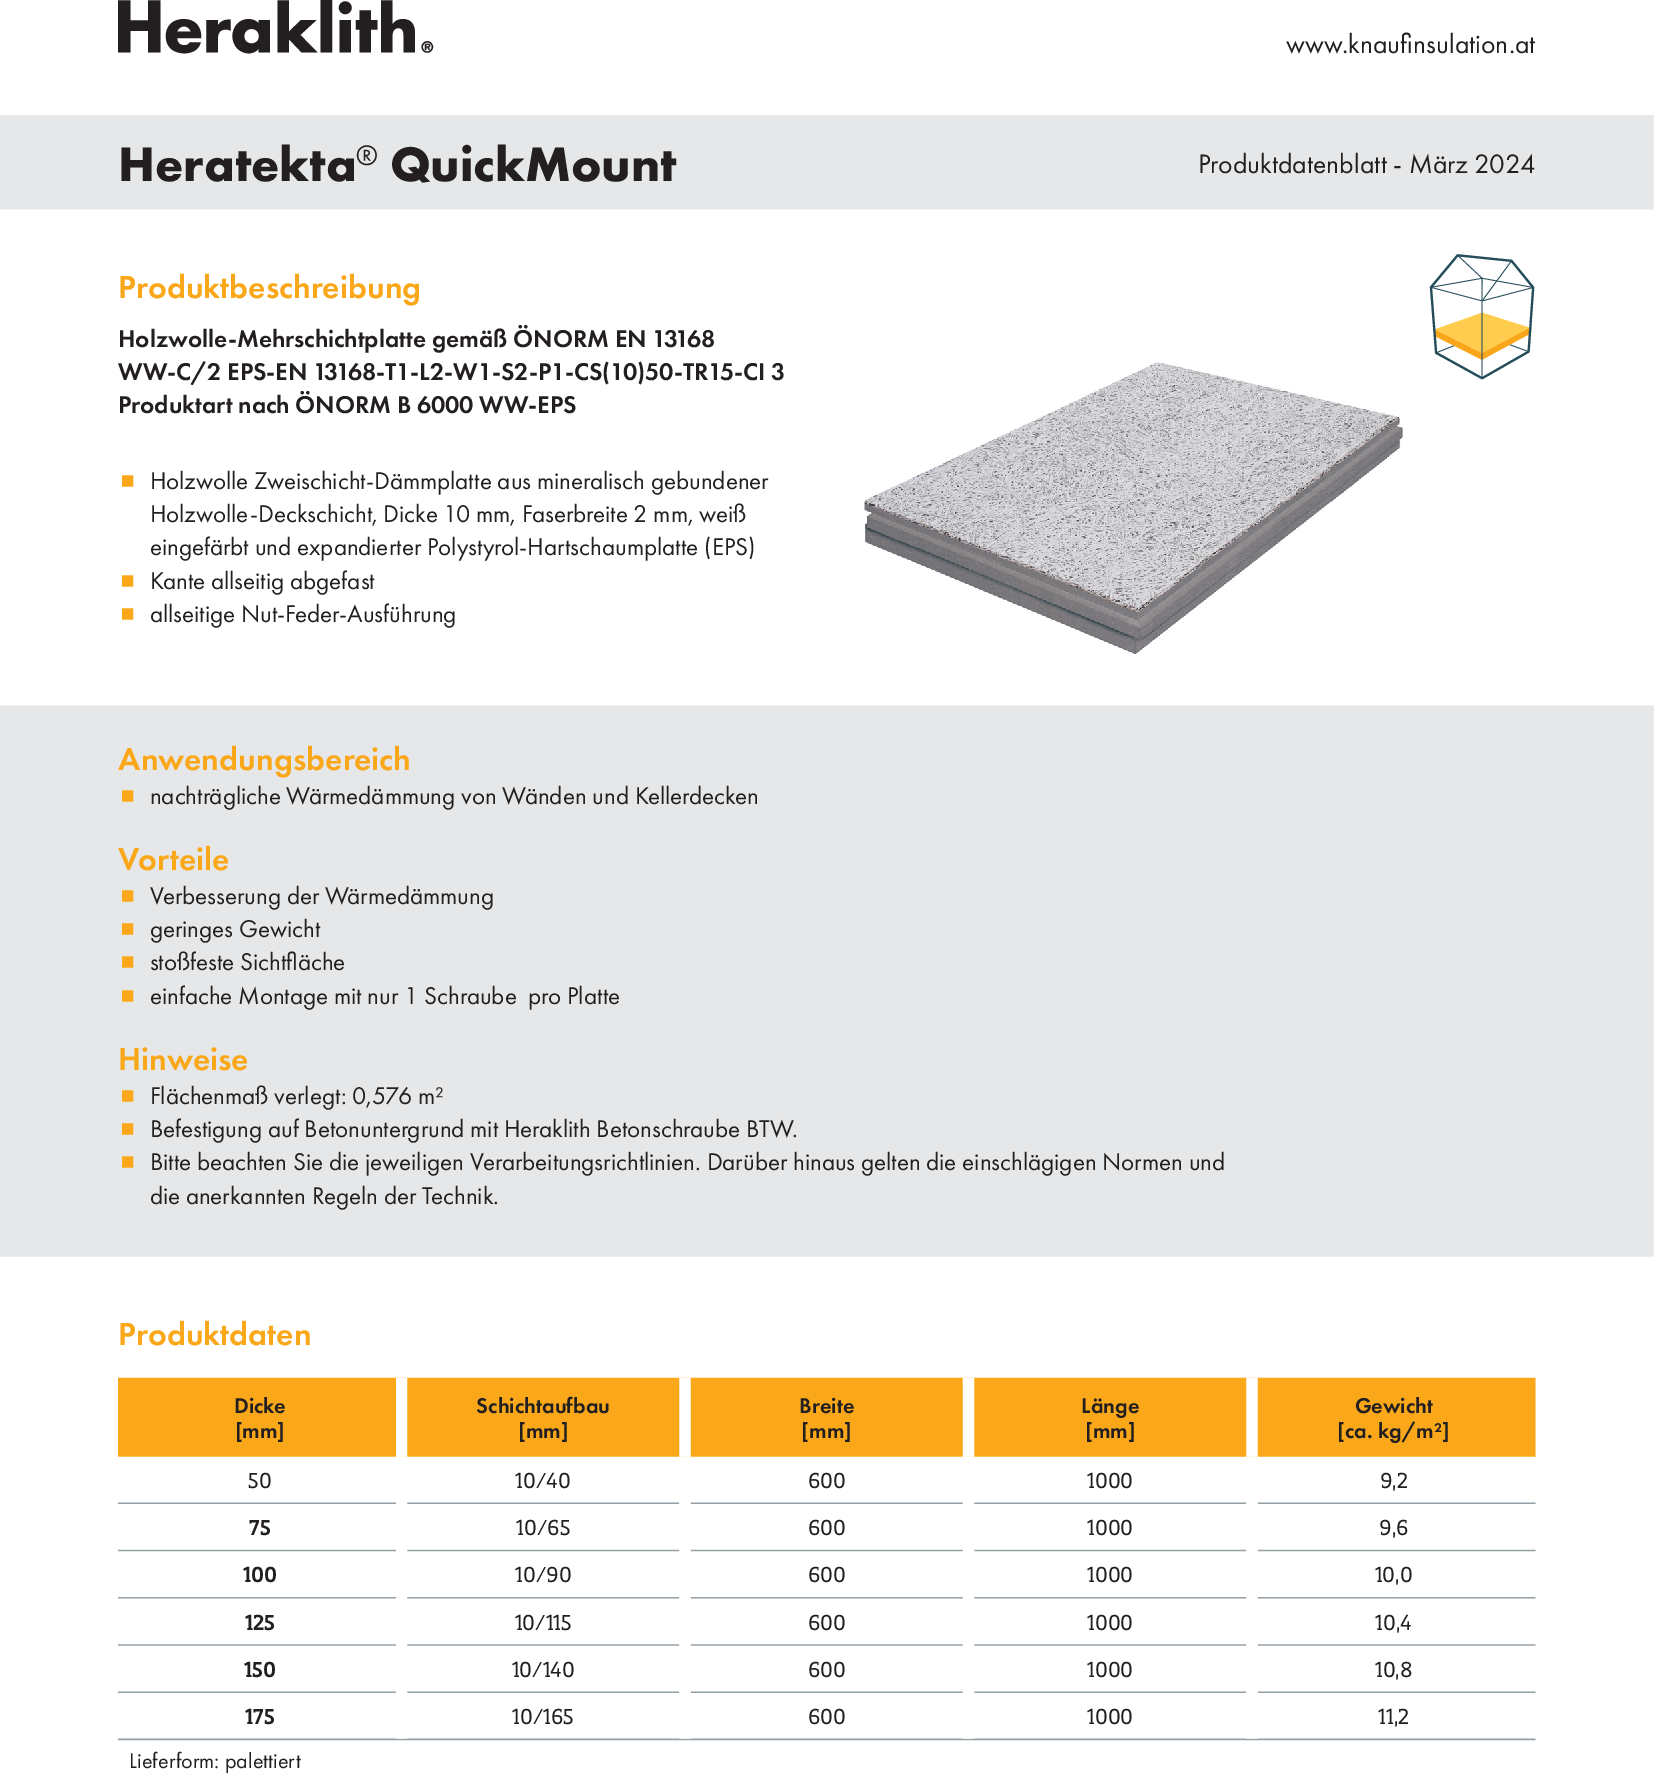 Heratekta QuickMount, Produktdatenblatt